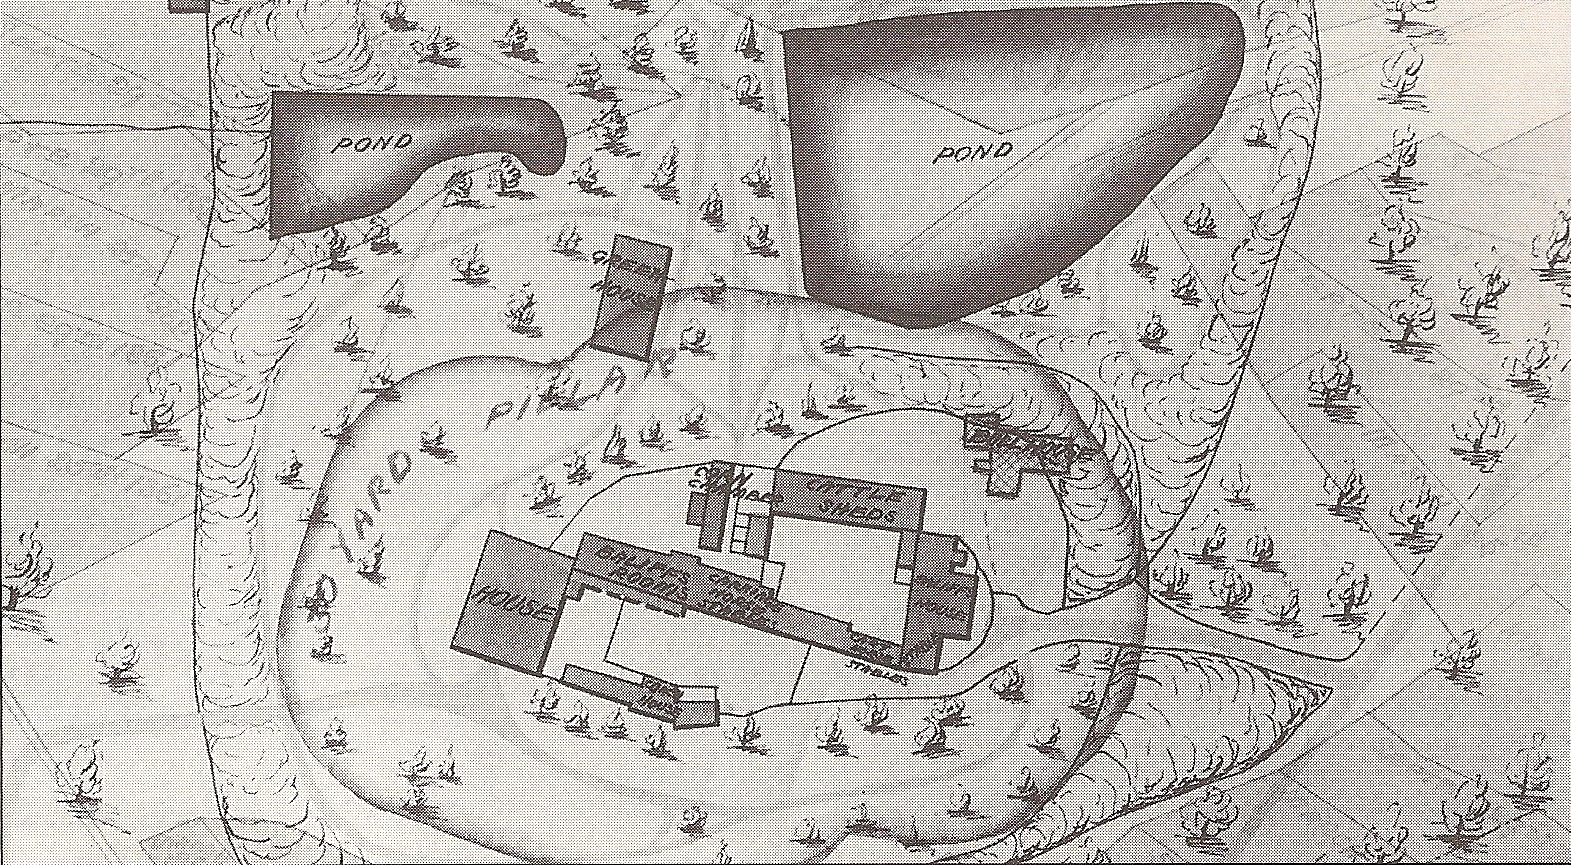 Tupton Hall Ground plans 1880